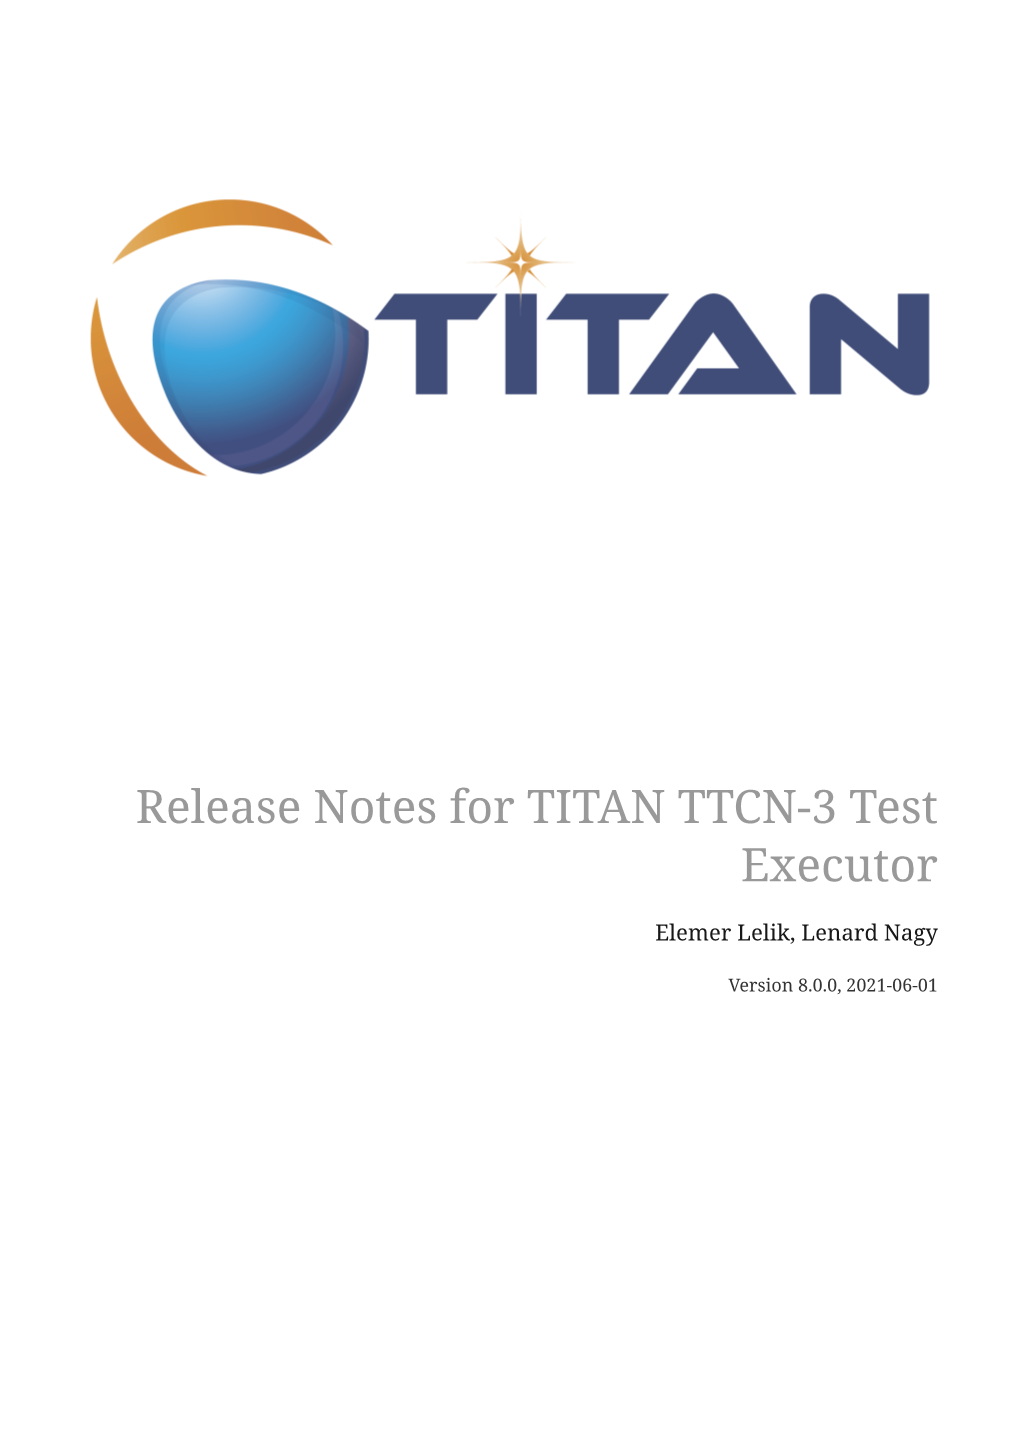 Release Notes for TITAN TTCN-3 Test Executor